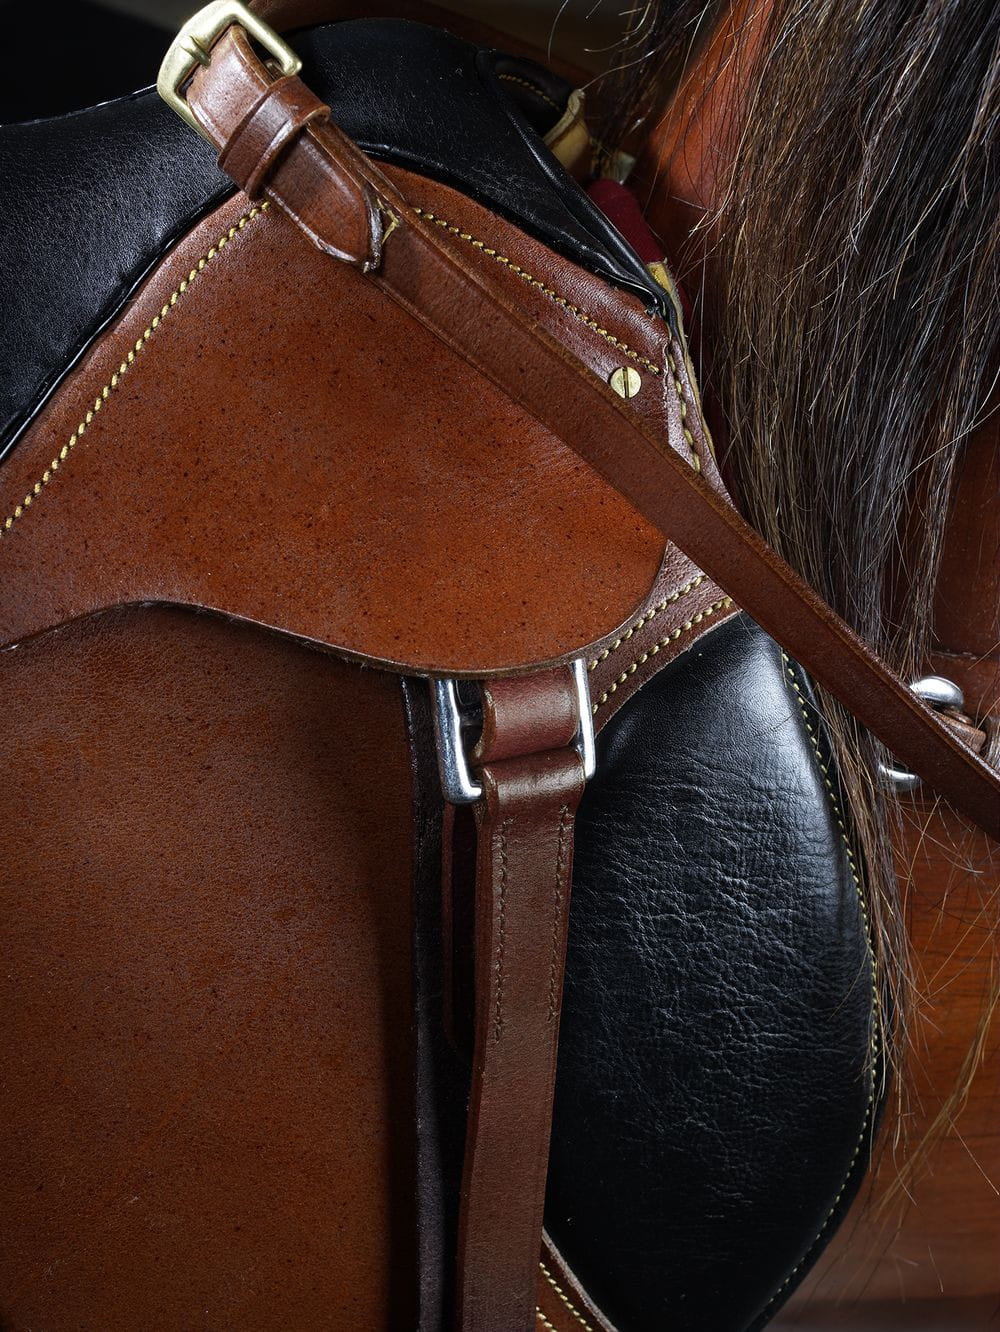 Authentic Models Victorian Rocking Horse Replica, Finish